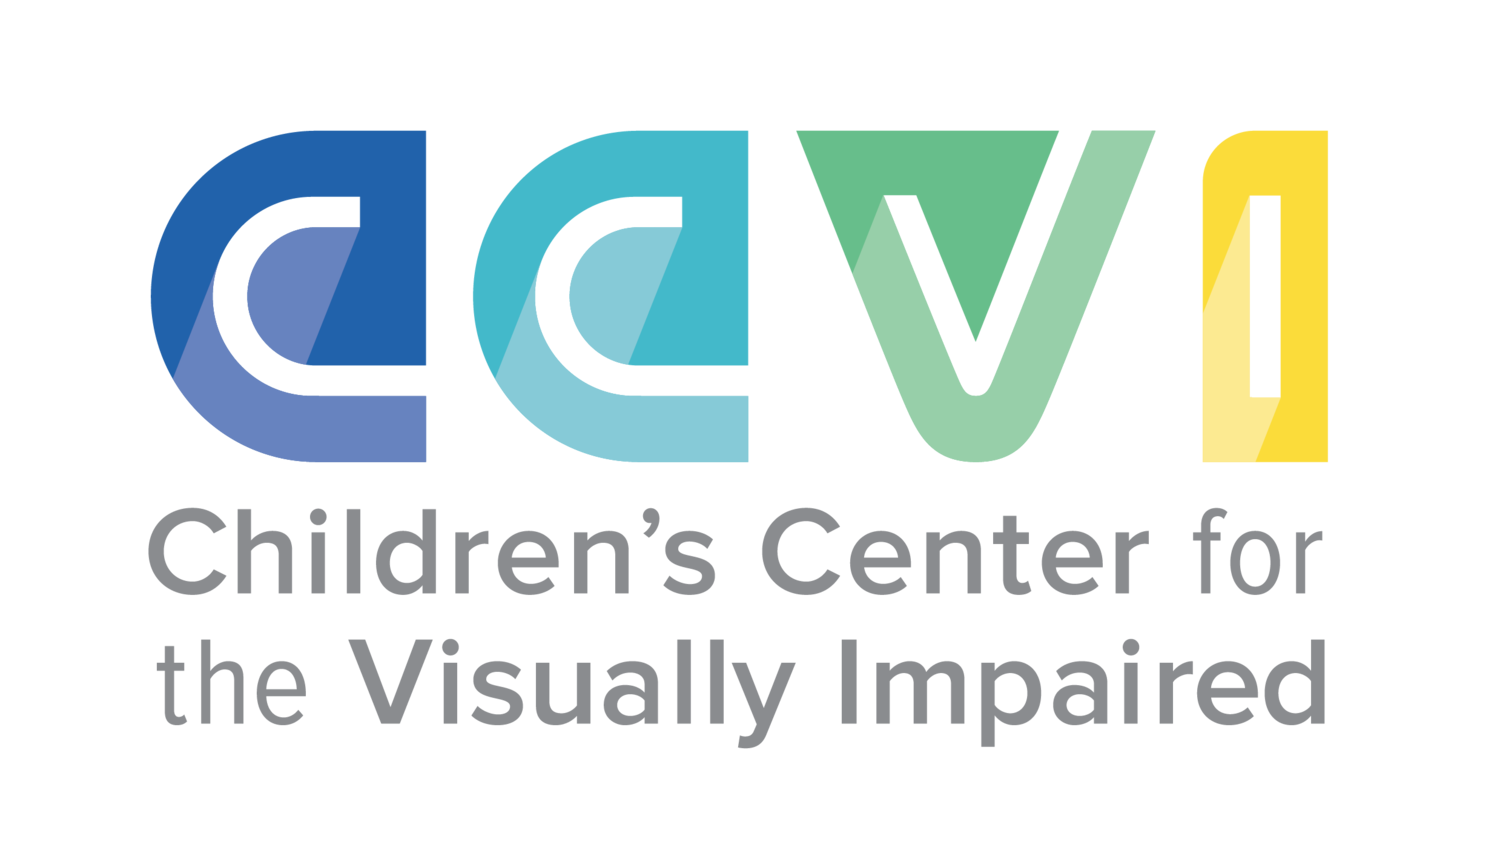 Children's Center for the Visually Impaired